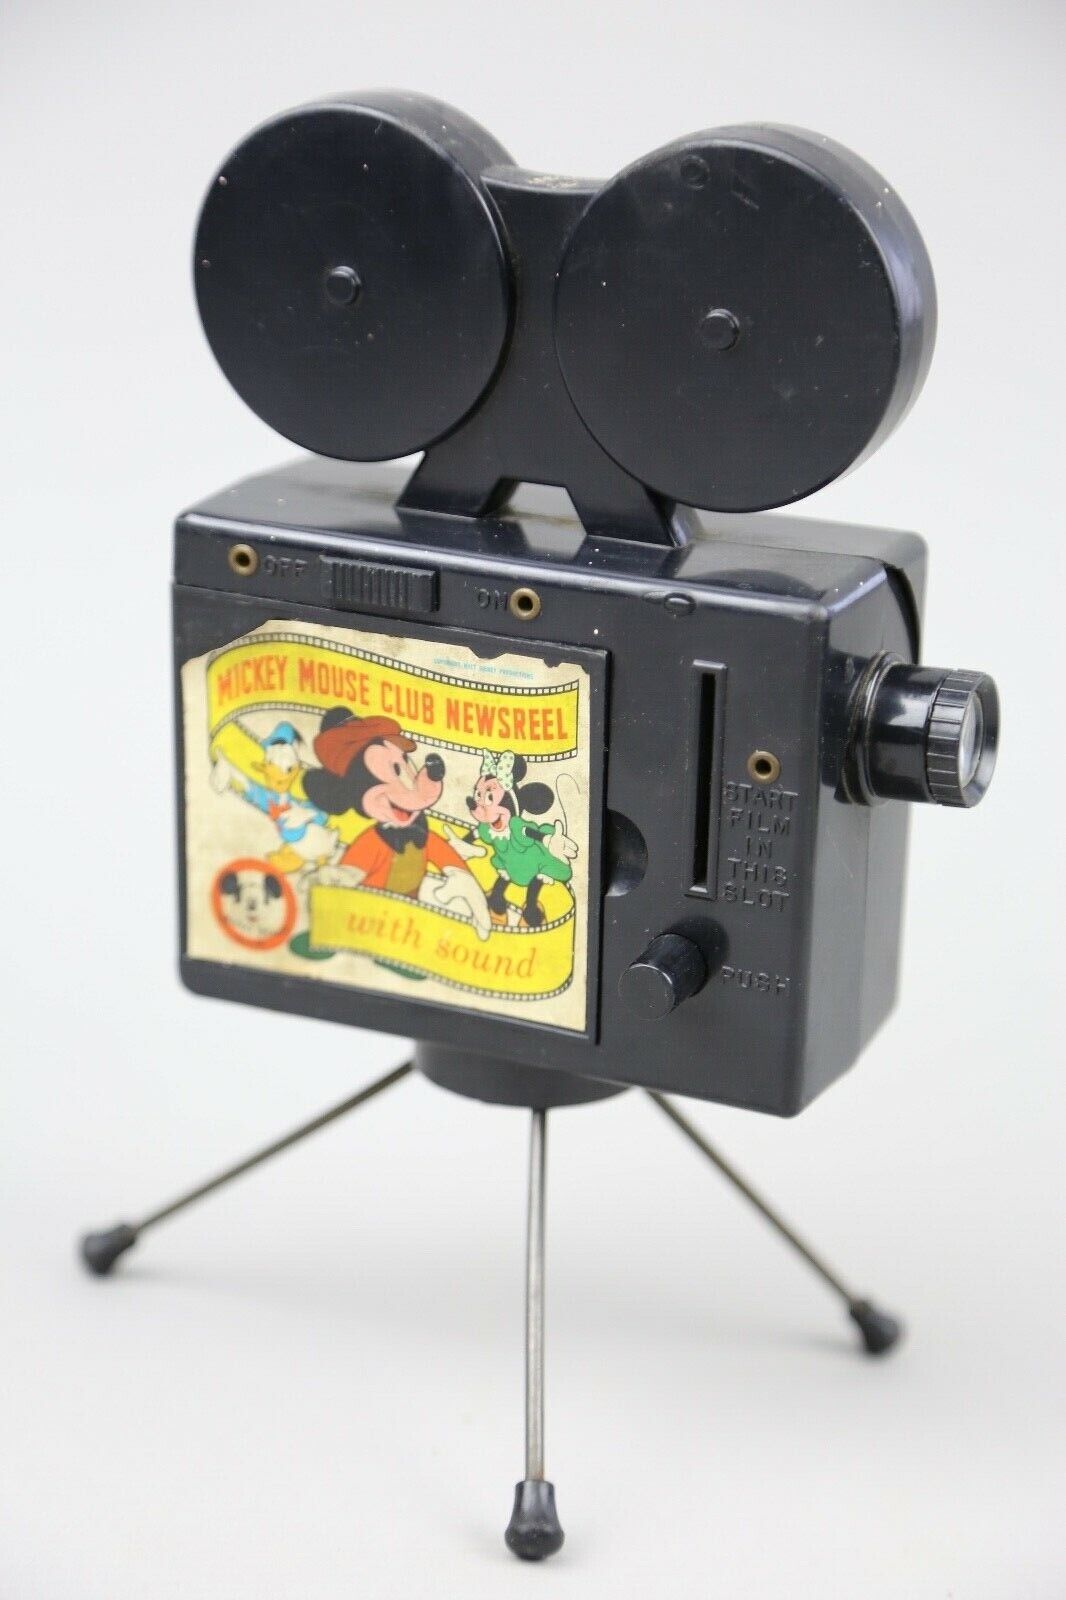 Mickey Mouse Club Newsreel Projector vintage 1950s Mattel toy Disney